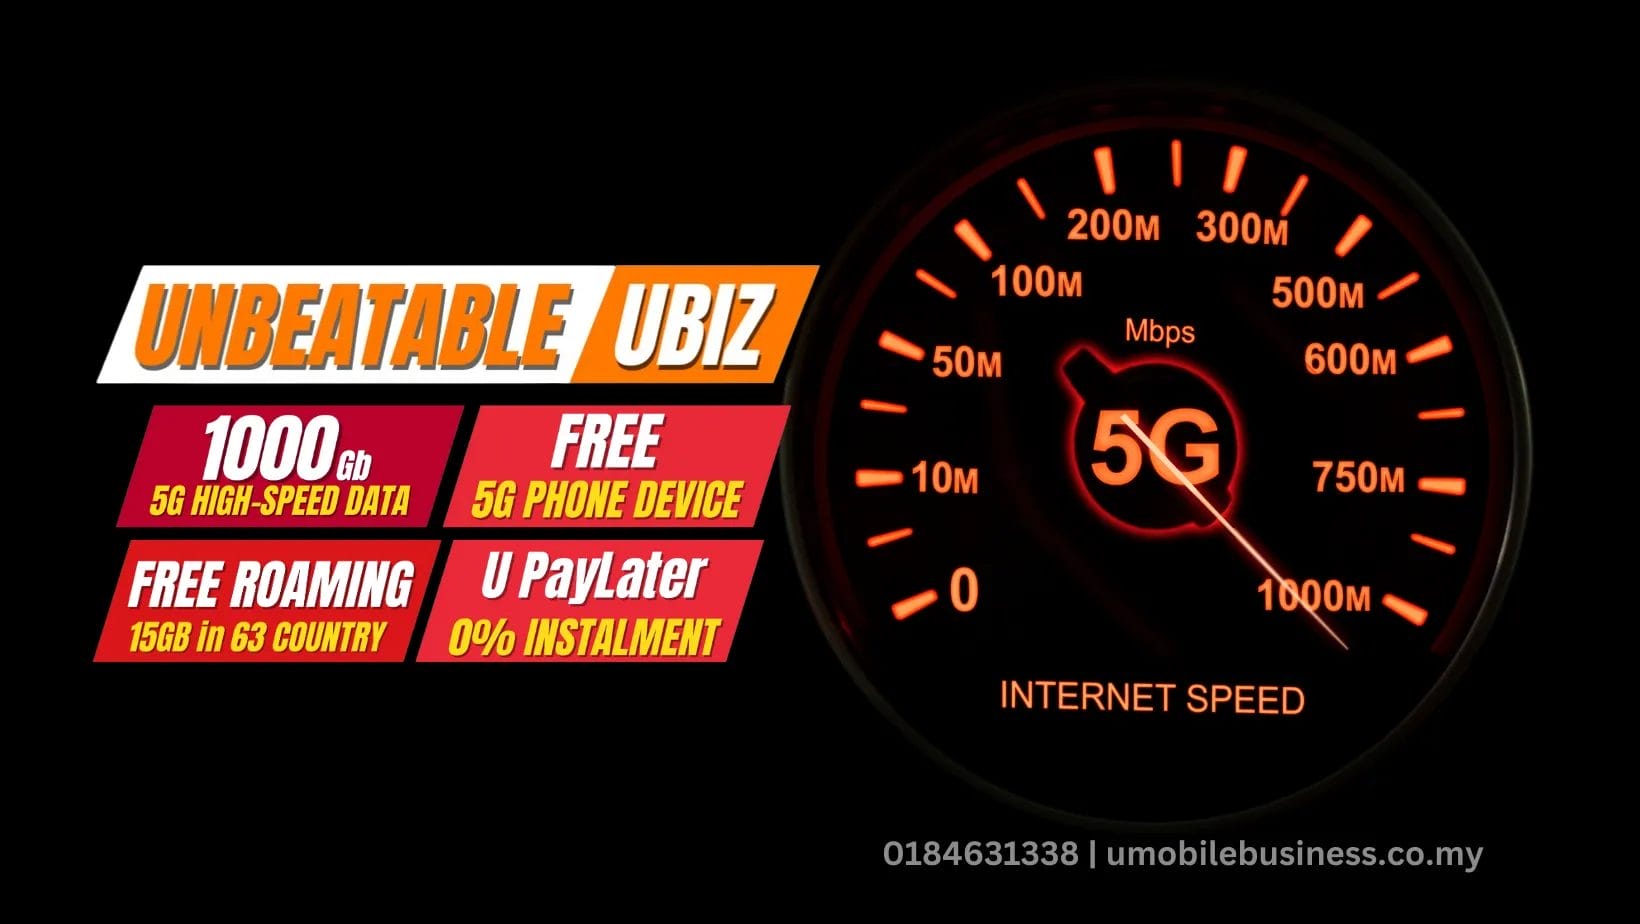 U Mobile business 5G